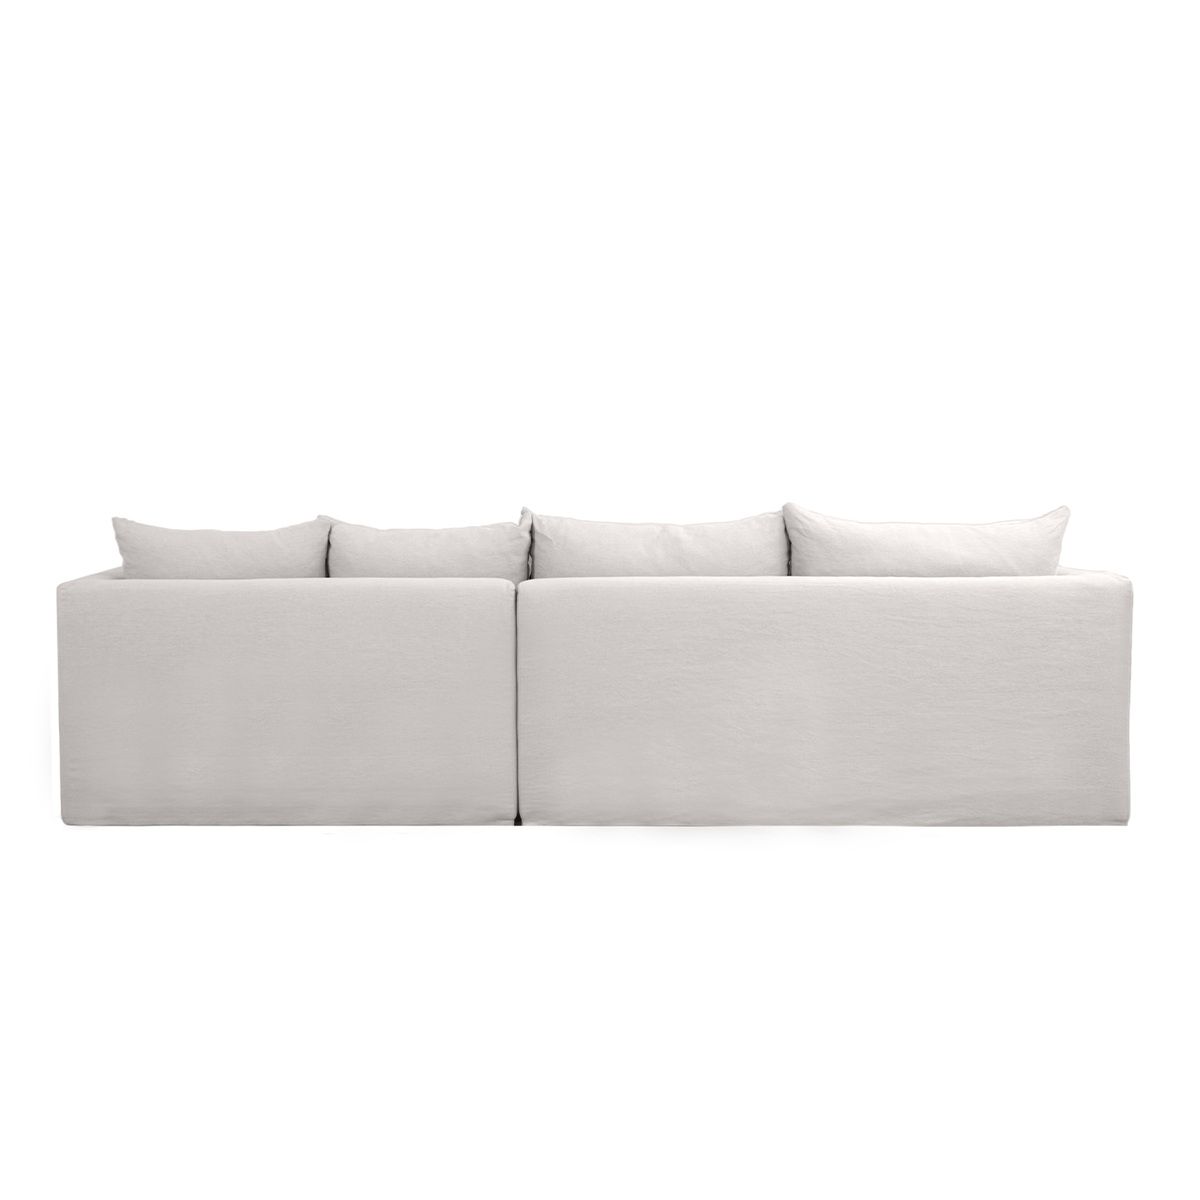 SuperBox corner sofa - Right angle, Various Sizes - Linen - image 5